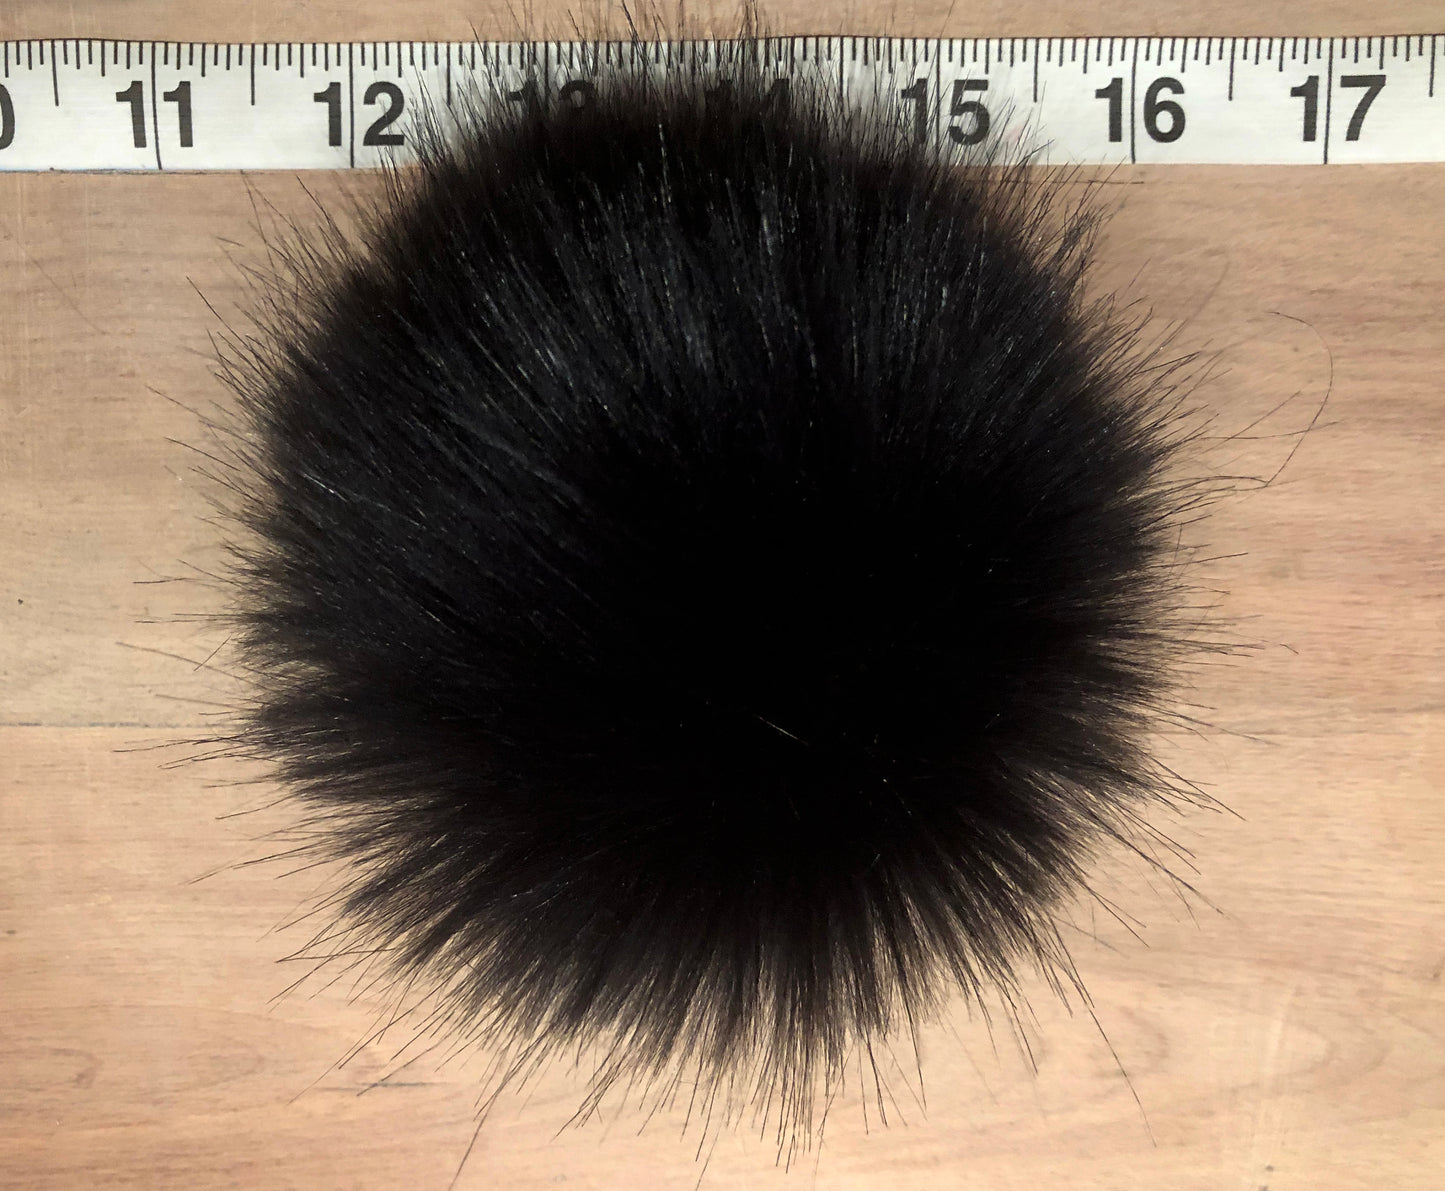 Raven Black Pom Pom, Faux Fur Blue Black Hat Pom, Small 3.5 Inch Fur Ball, Detachable Loop, Fake Fur Puff, Hat Topper, Winter Hat Accessory